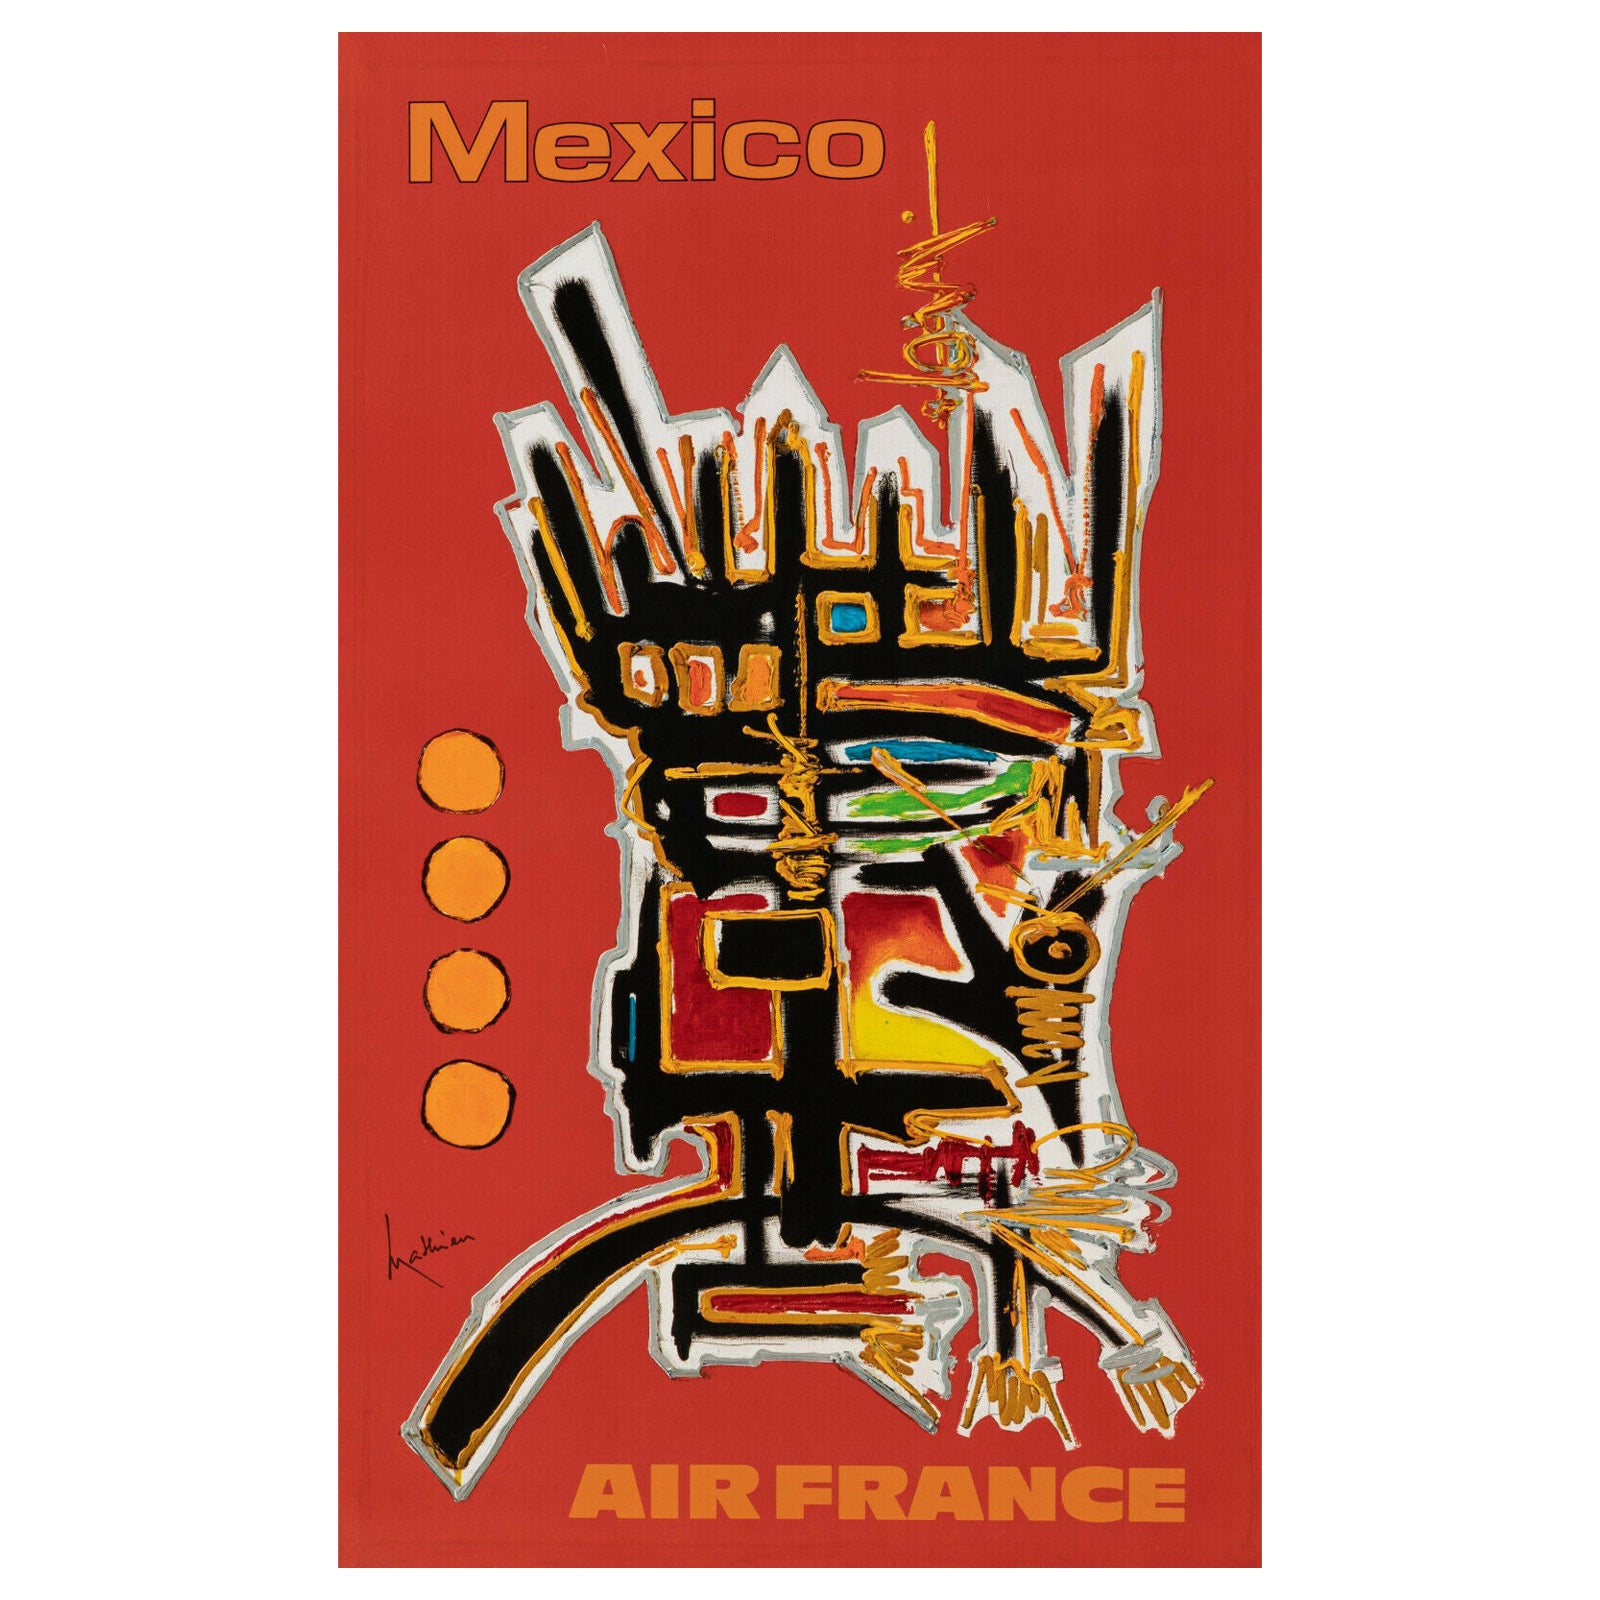 Georges Mathieu, Original Vintage Airline Poster, Air France, Mexico, 1967